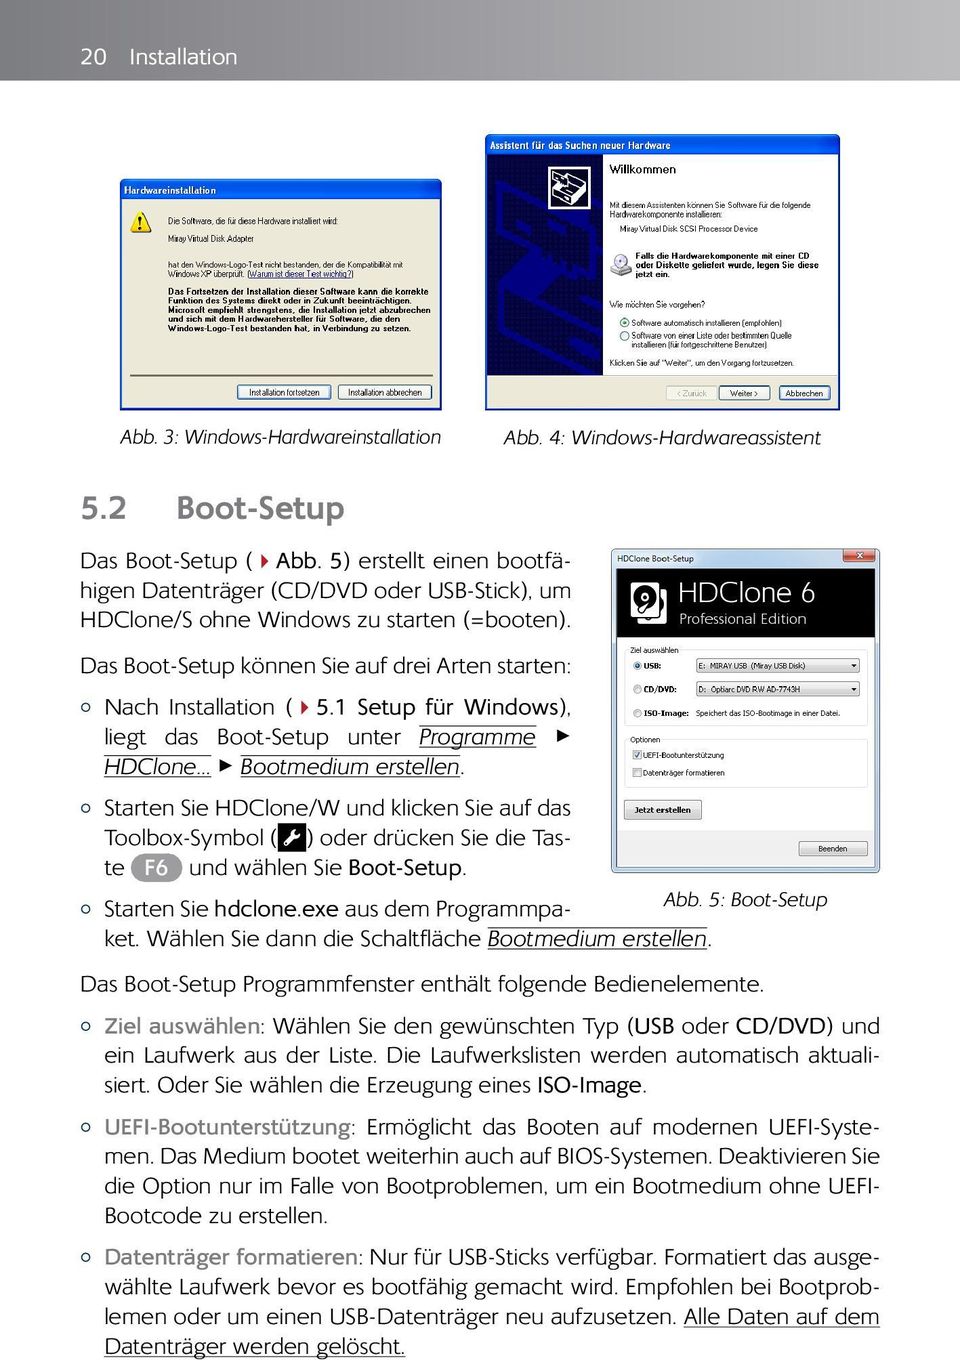 1 Setup für Windows), liegt das Boot-Setup unter Programme HDClone... Bootmedium erstellen.